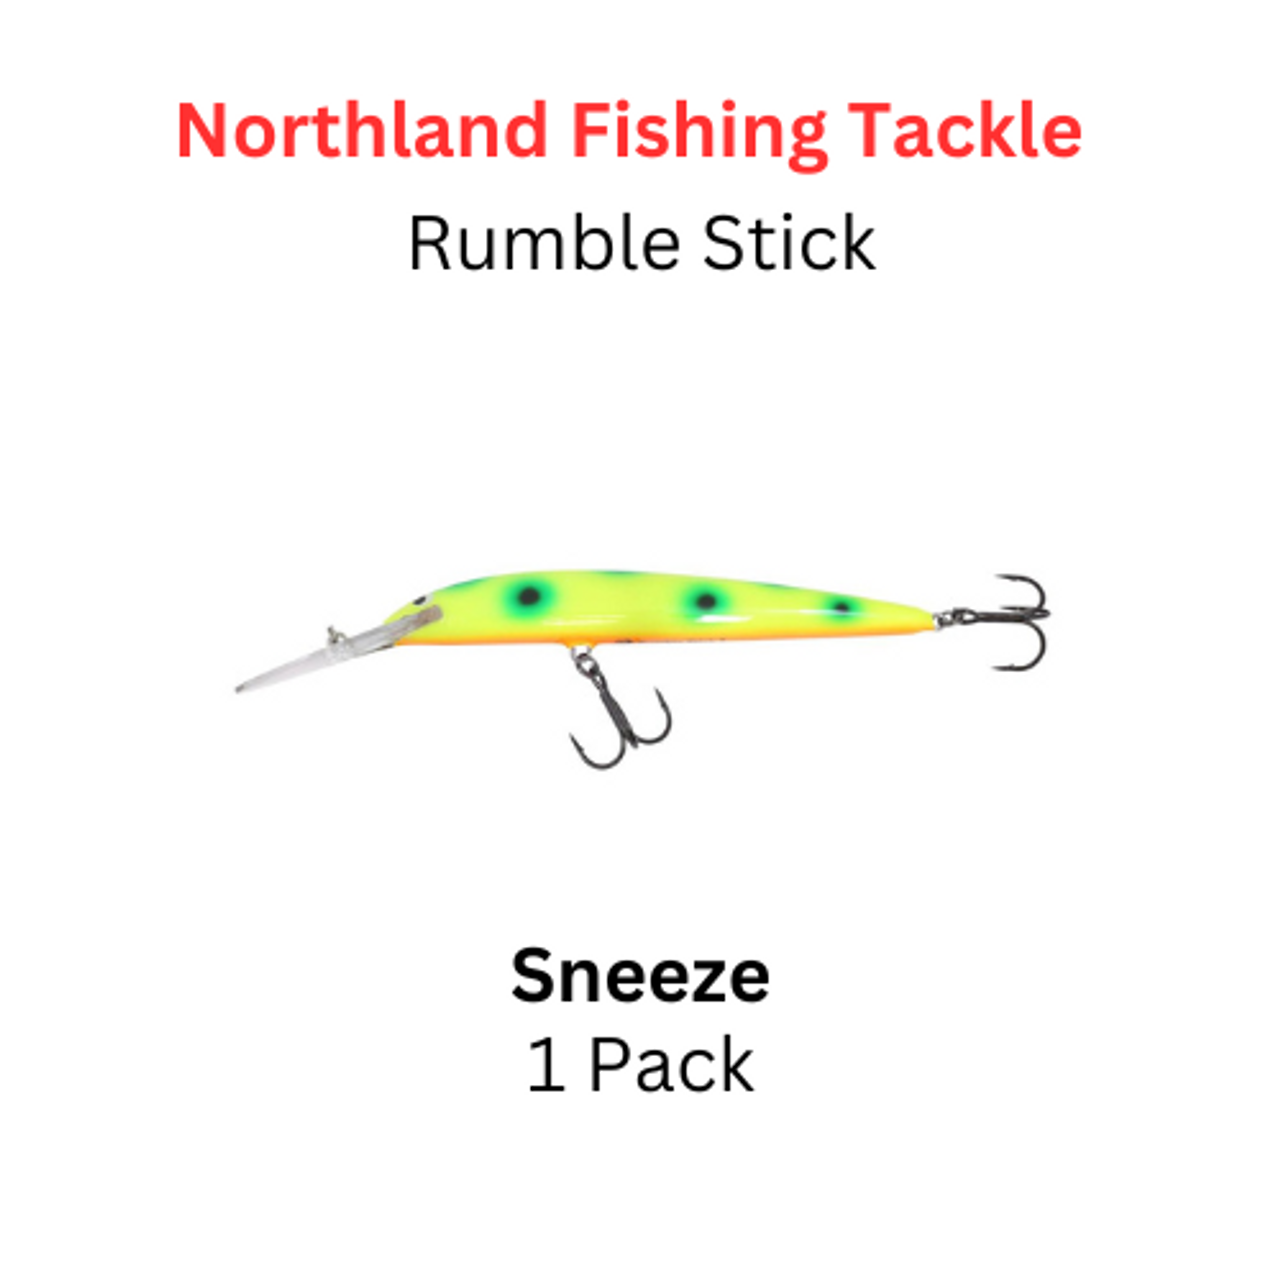 Northland Fishing Tackle: Rumble stick crankbait size 4 Sneeze